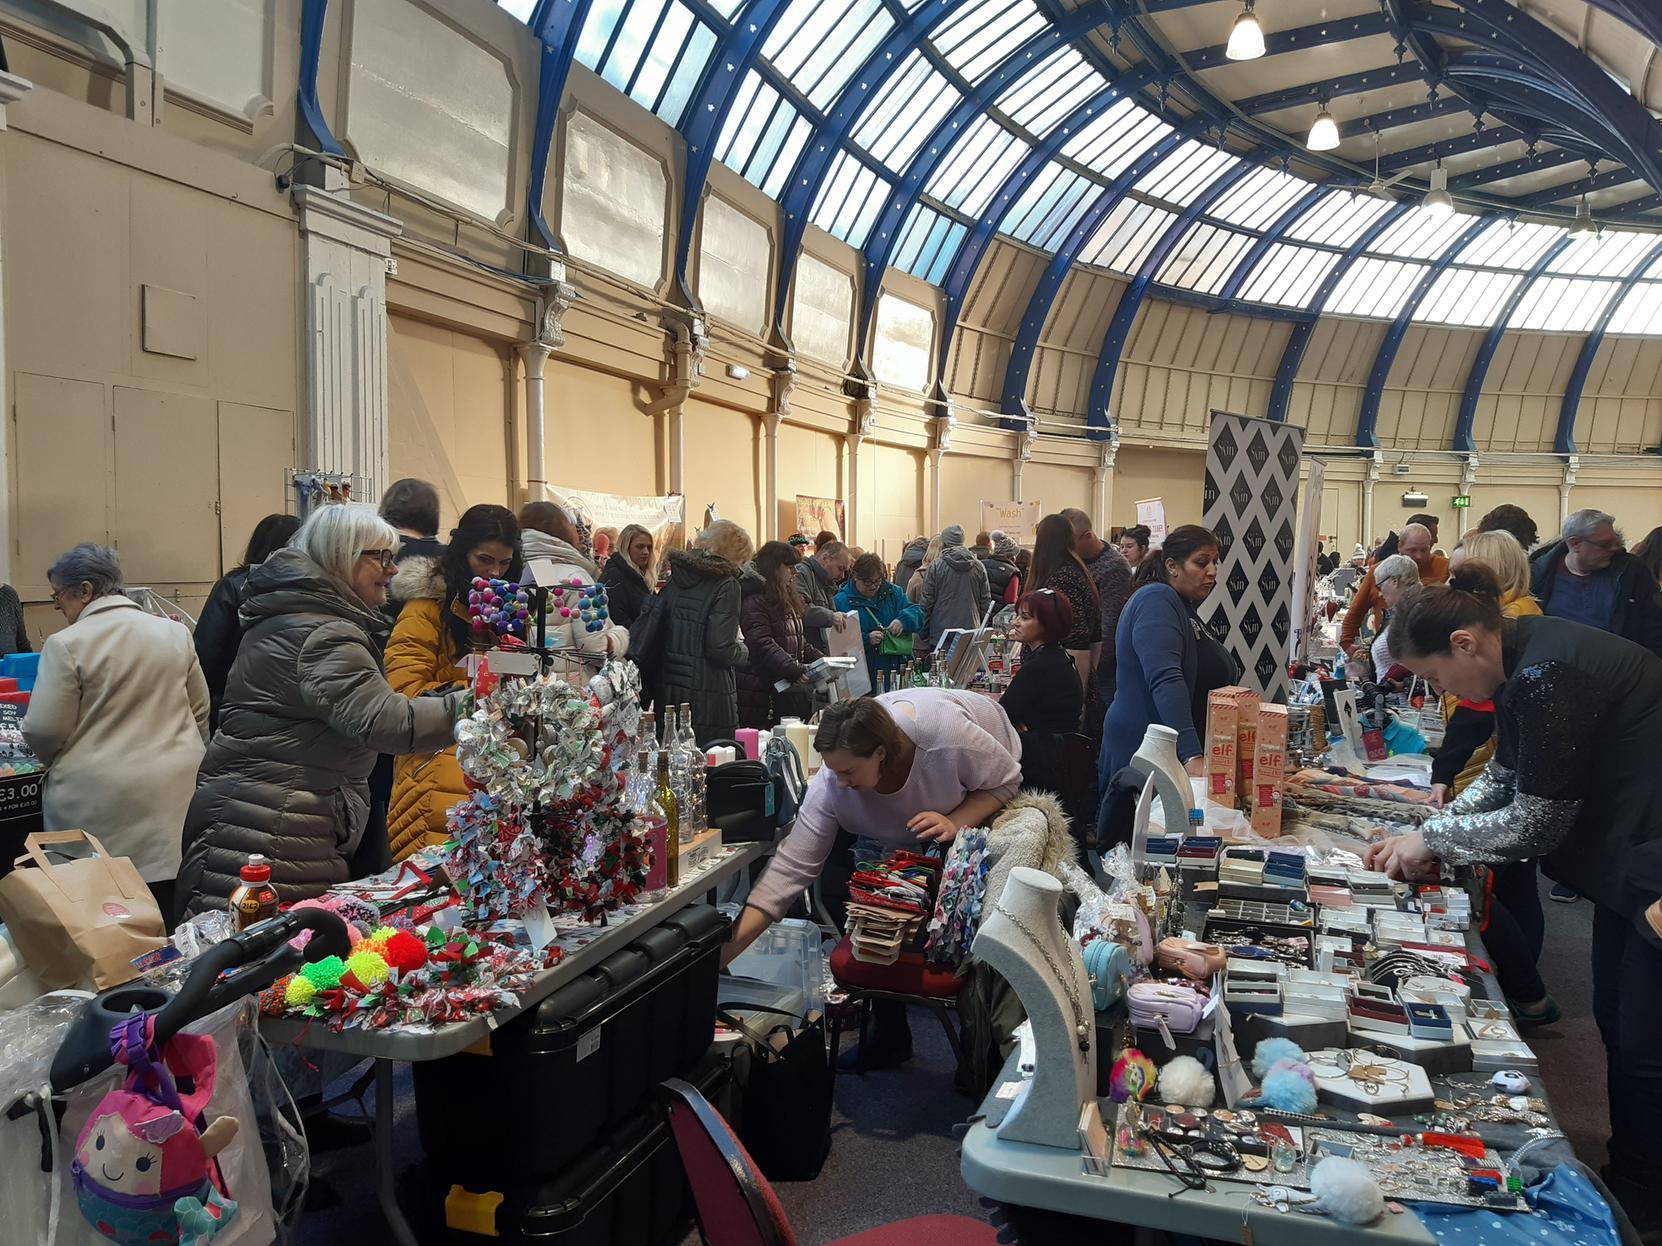 The Blackpool Christmas Market